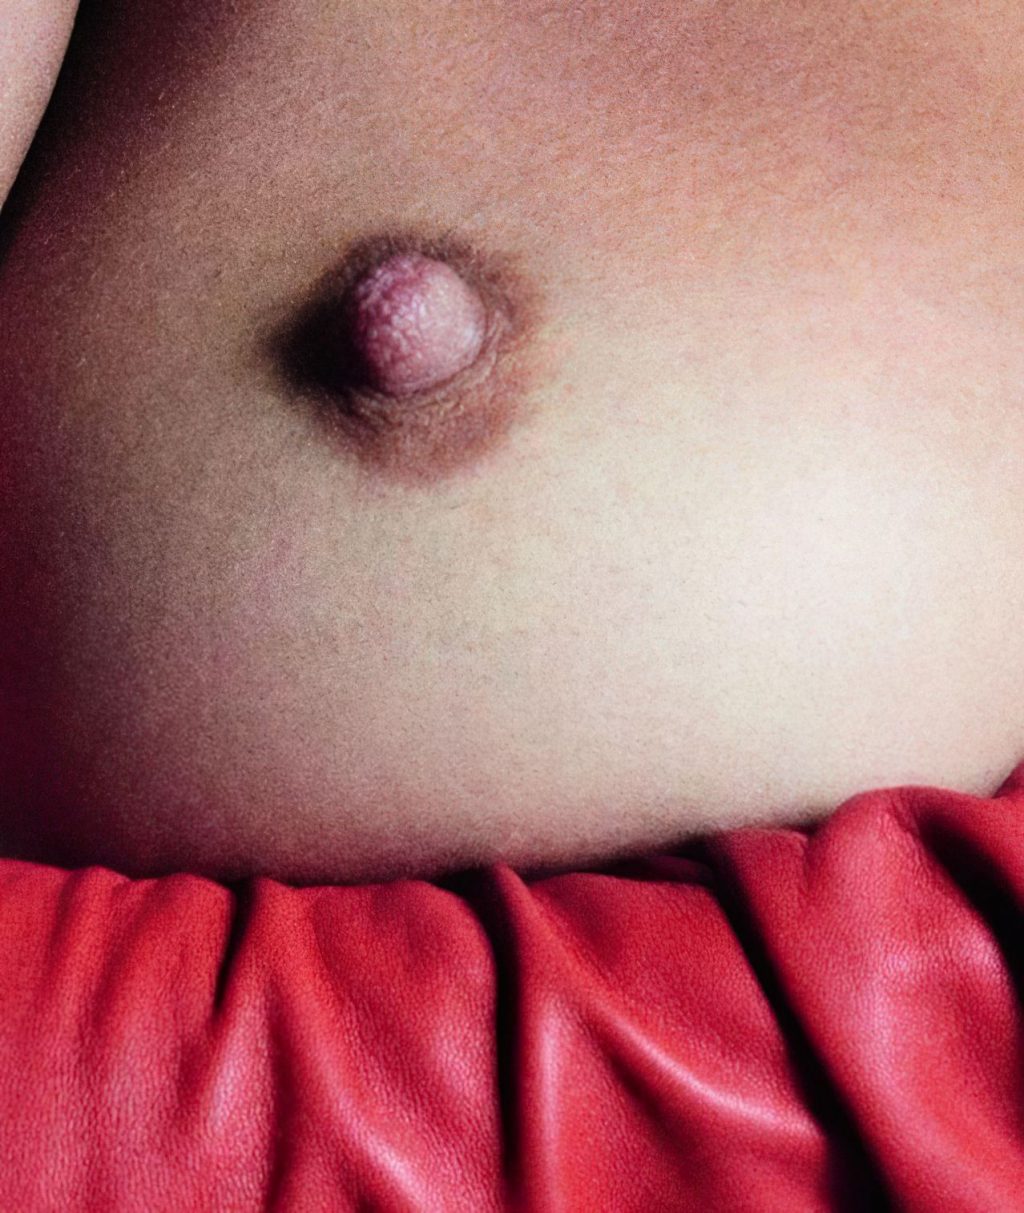 selfie Rita Ora photoshoot photos nude leaked Instagram celebrity 